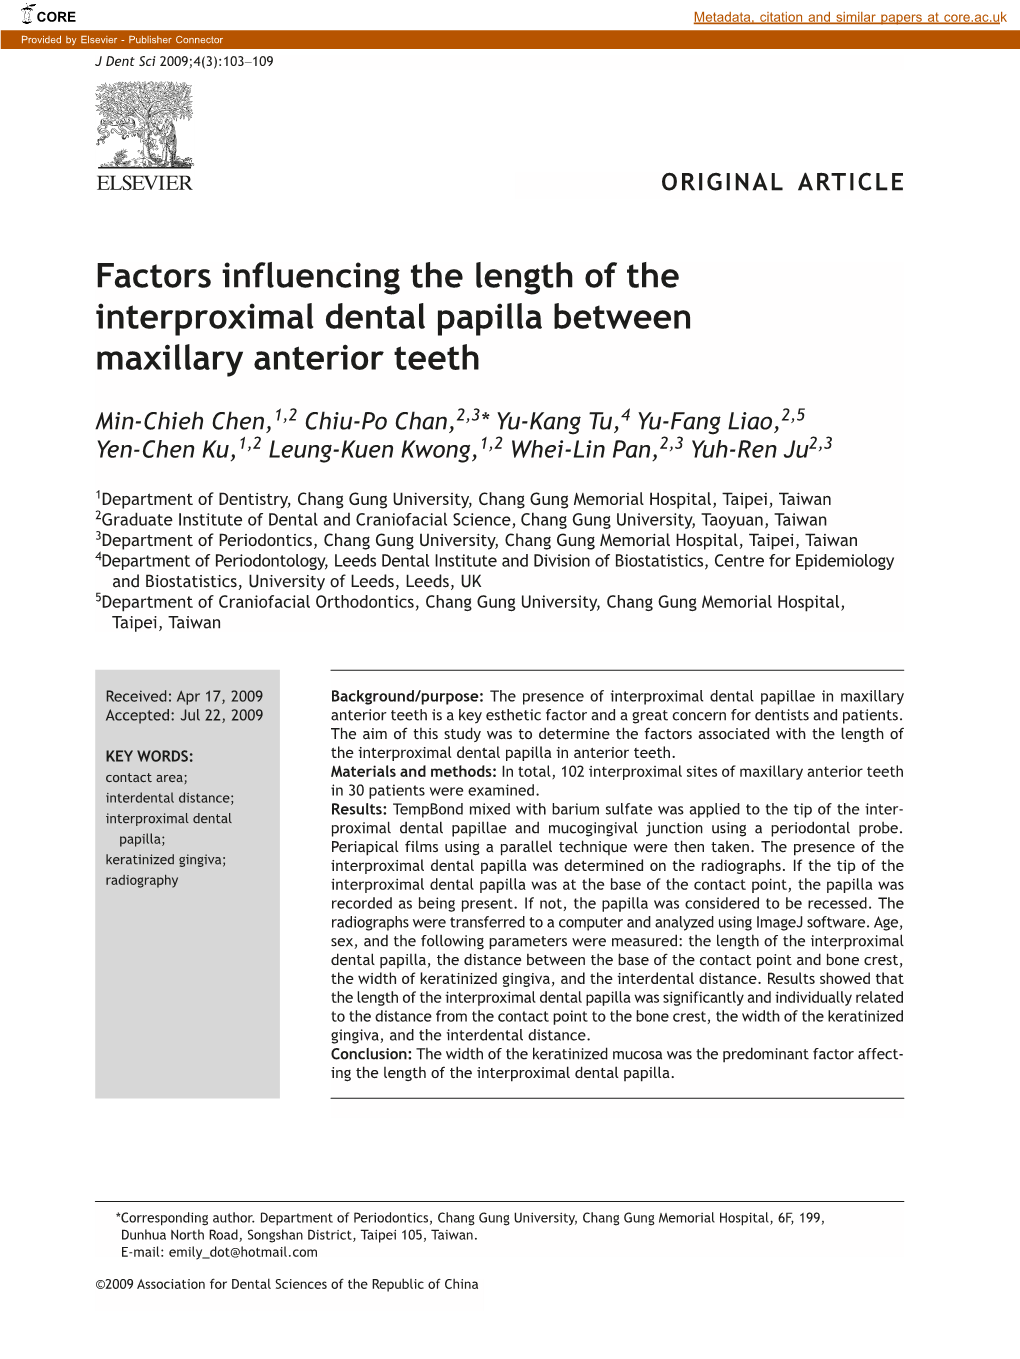 Factors Influencing the Length of the Interproximal Dental Papilla Between Maxillary Anterior Teeth